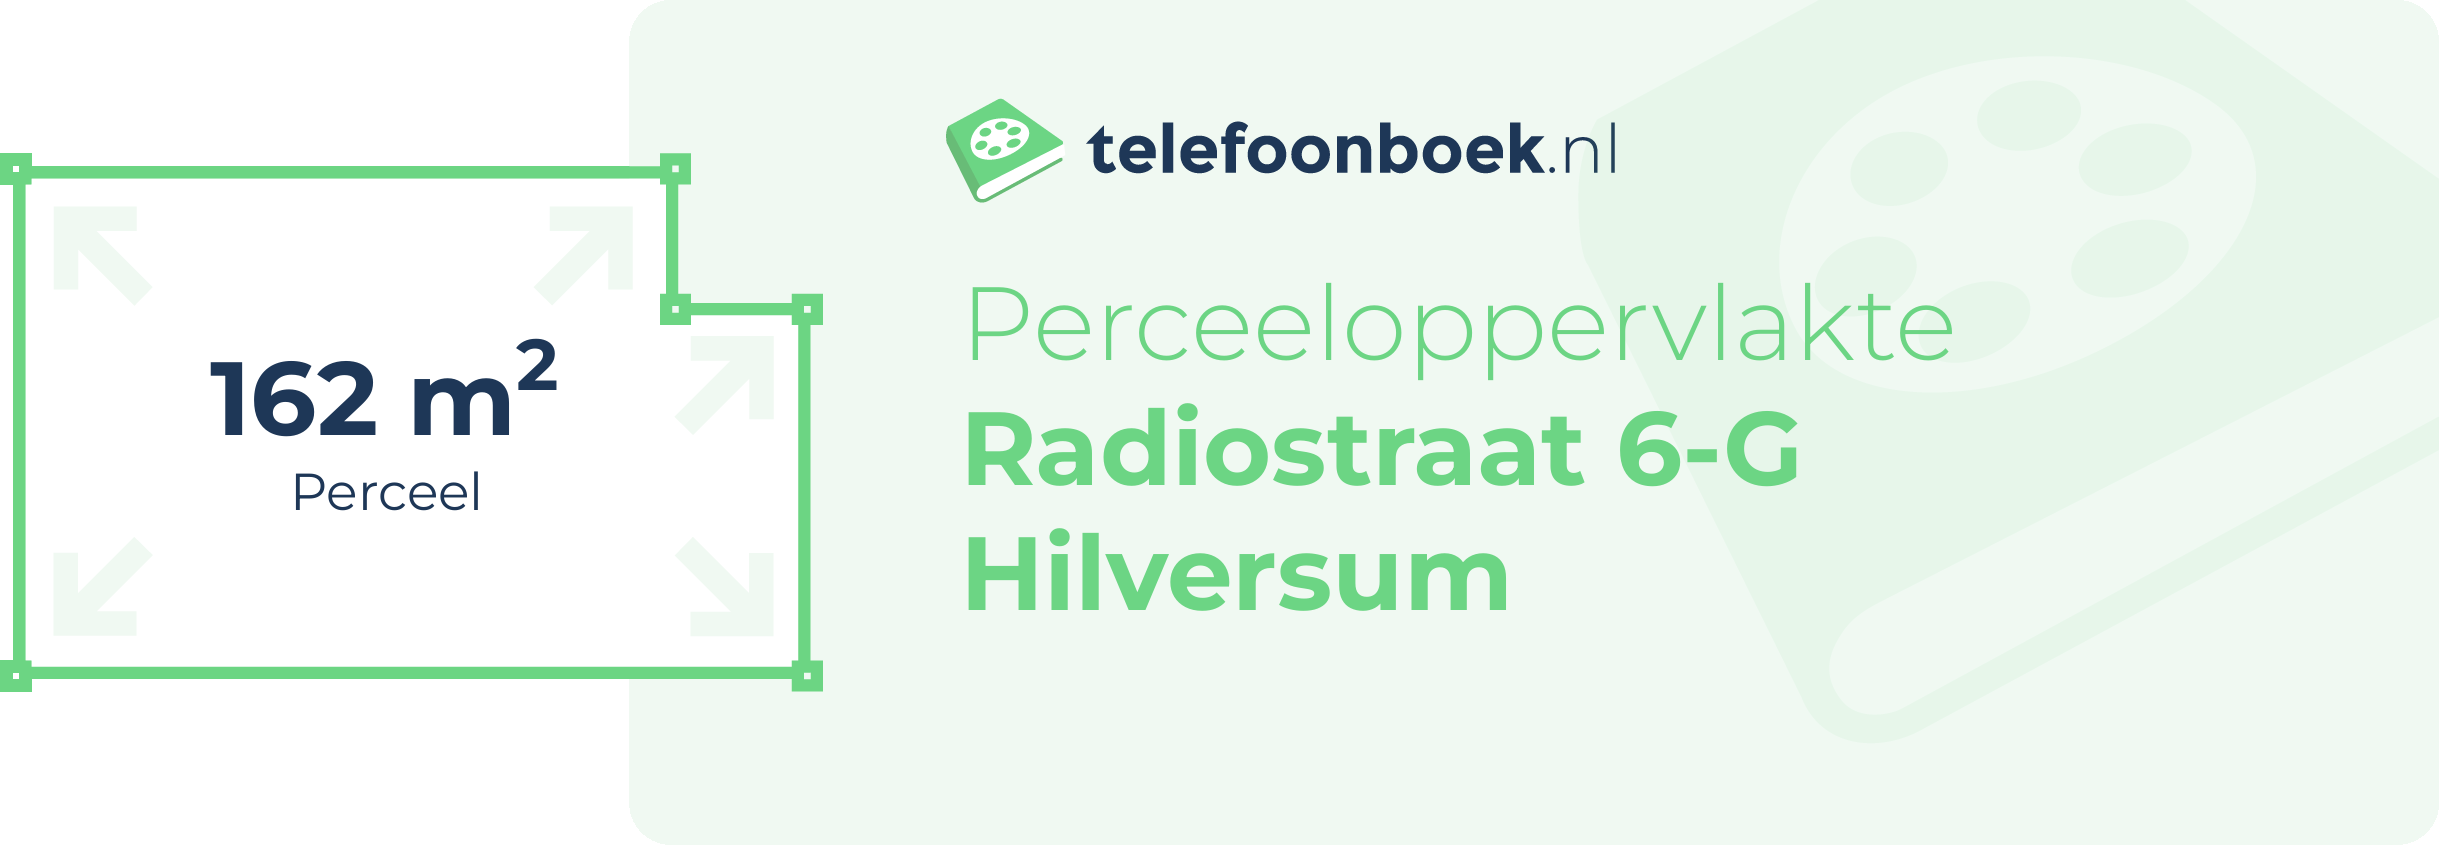 Perceeloppervlakte Radiostraat 6-G Hilversum